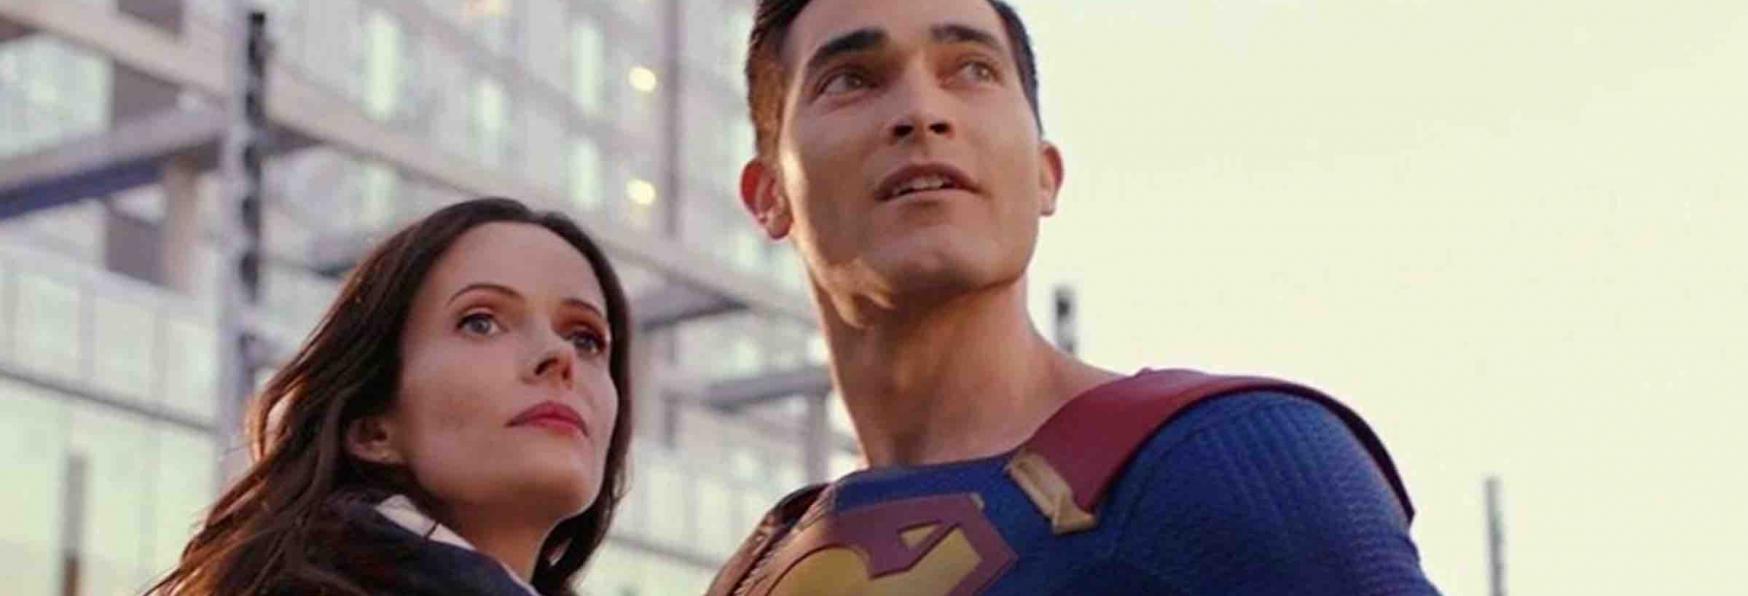 Superman & Lois e Swamp Things nel Trailer delle Prossime Uscite targate The CW